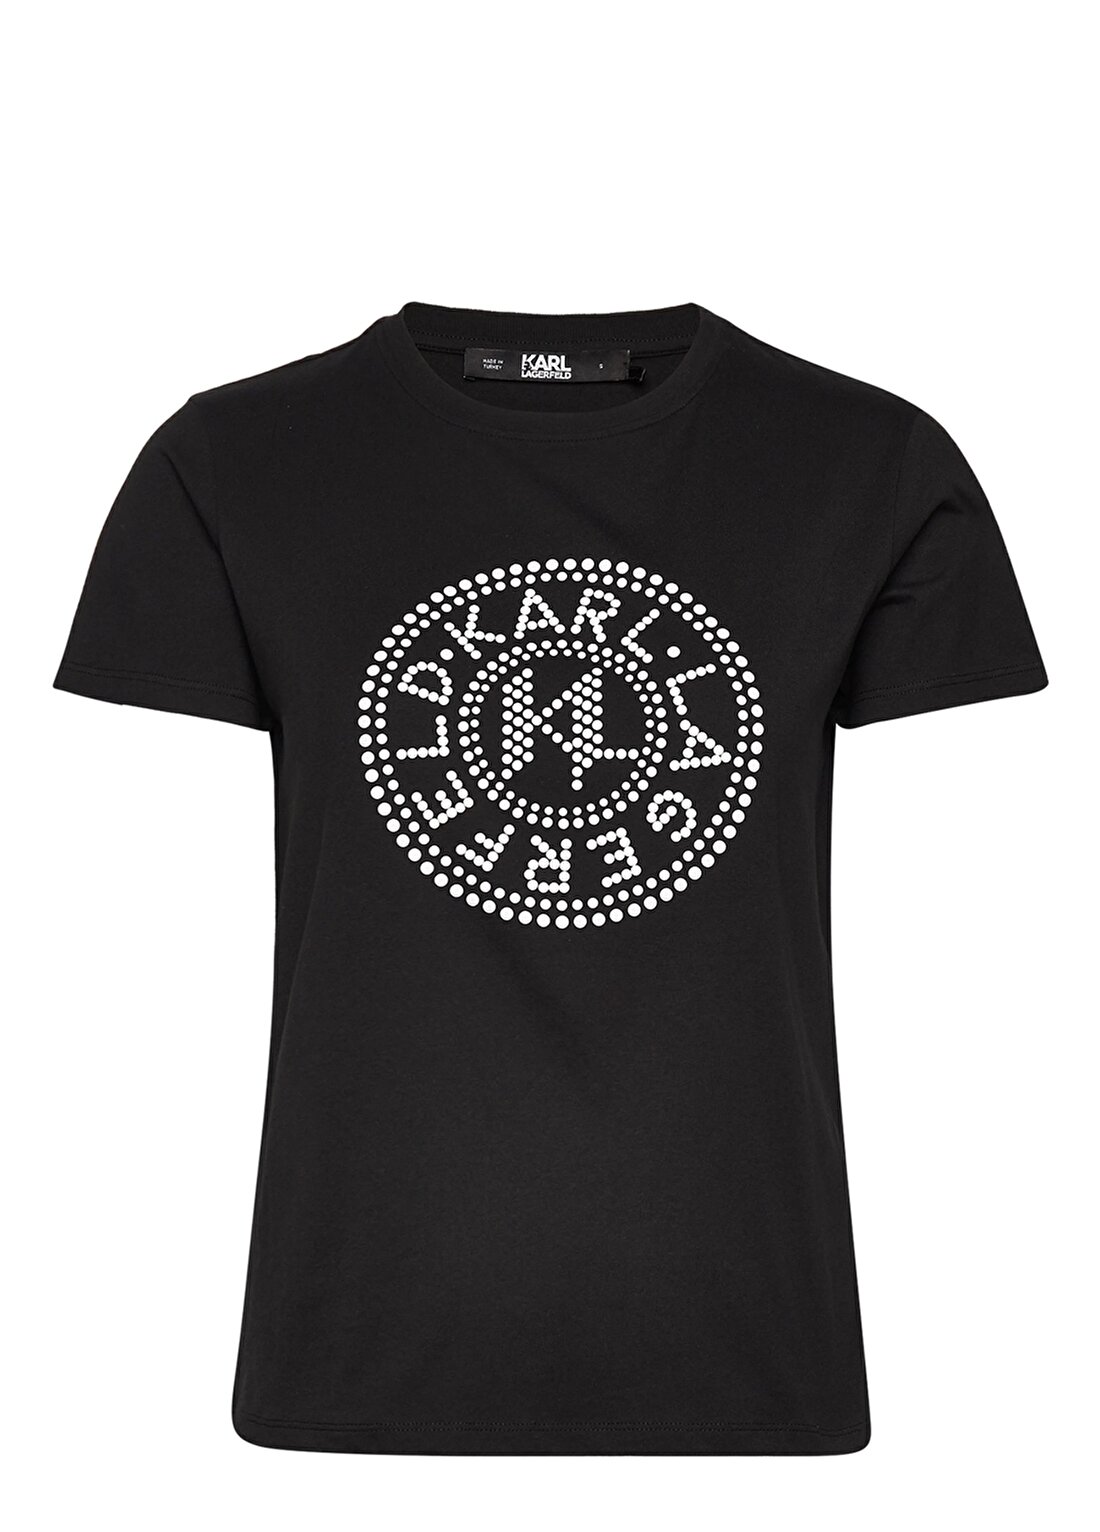 KARL LAGERFELD Bisiklet Yaka Baskılı Siyah Kadın T-Shirt 231W1712